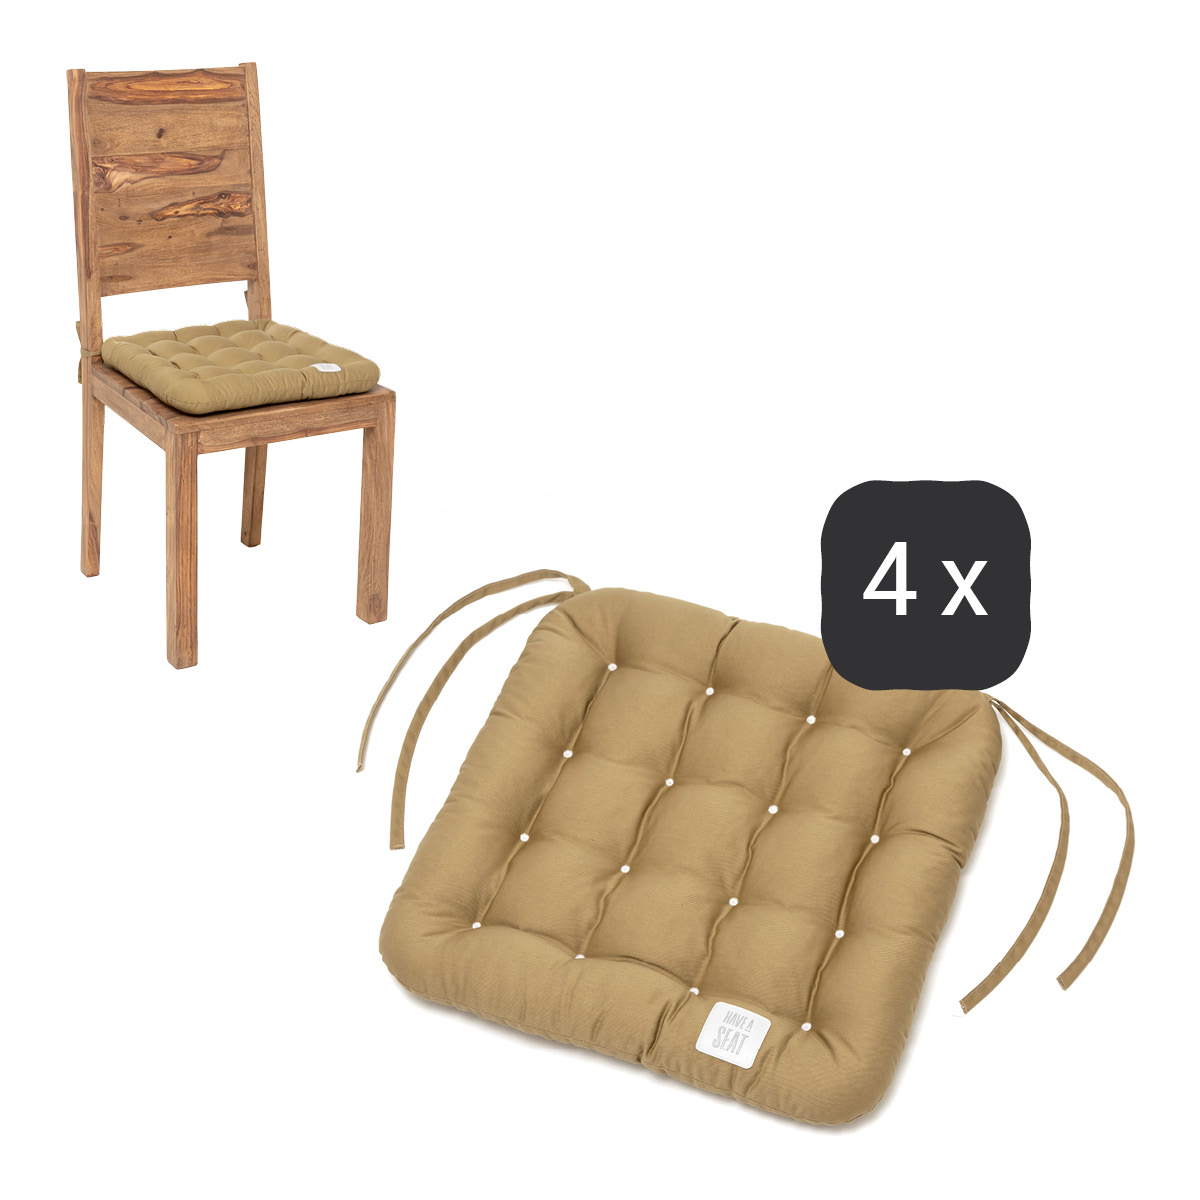 Stuhlkissen 40 x 40 cm / Beige | 4er Set | Premium-Sitzkomfort | Indoor / Outdoor | waschbar bis 95°C | Allergiker geeignet | HAVE A SEAT Living